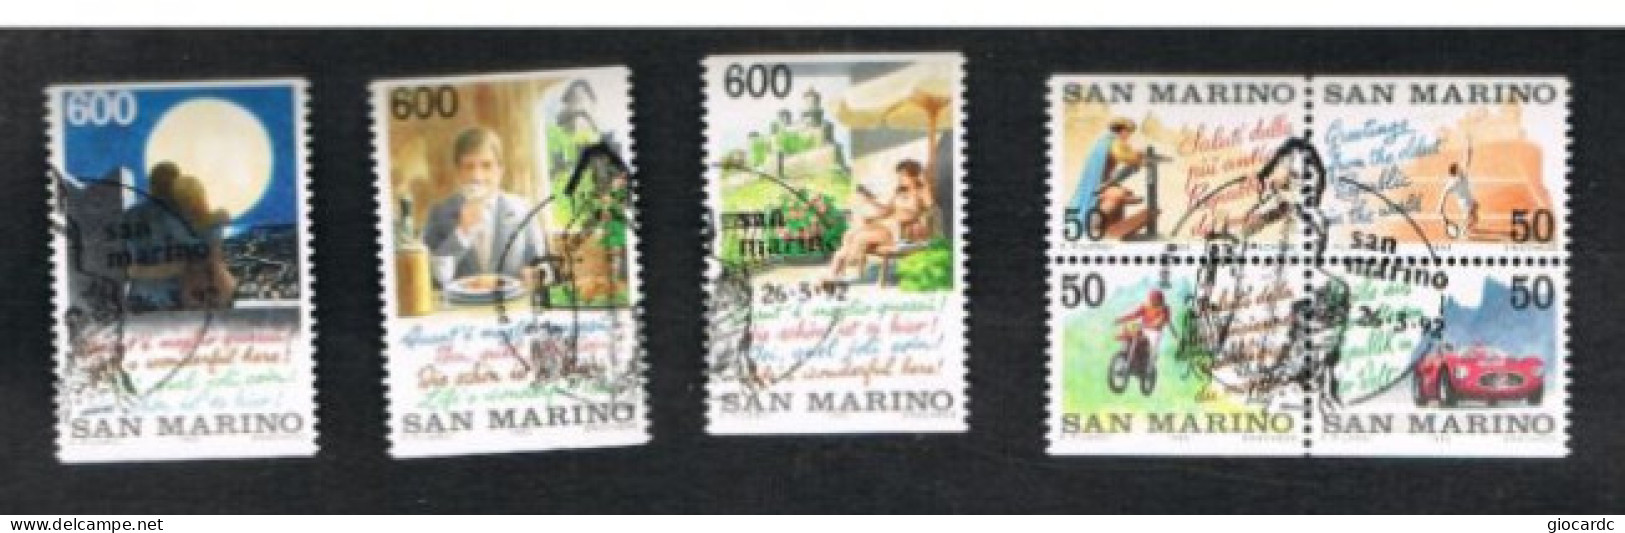 SAN MARINO - UN 1344.1350 - 1992 SITI TURISTICI DI SAN MARINO (COMPLET SET OF 7 STAMPS,4 SE-TENANT - BY BOOKLET)  - USED - Usati